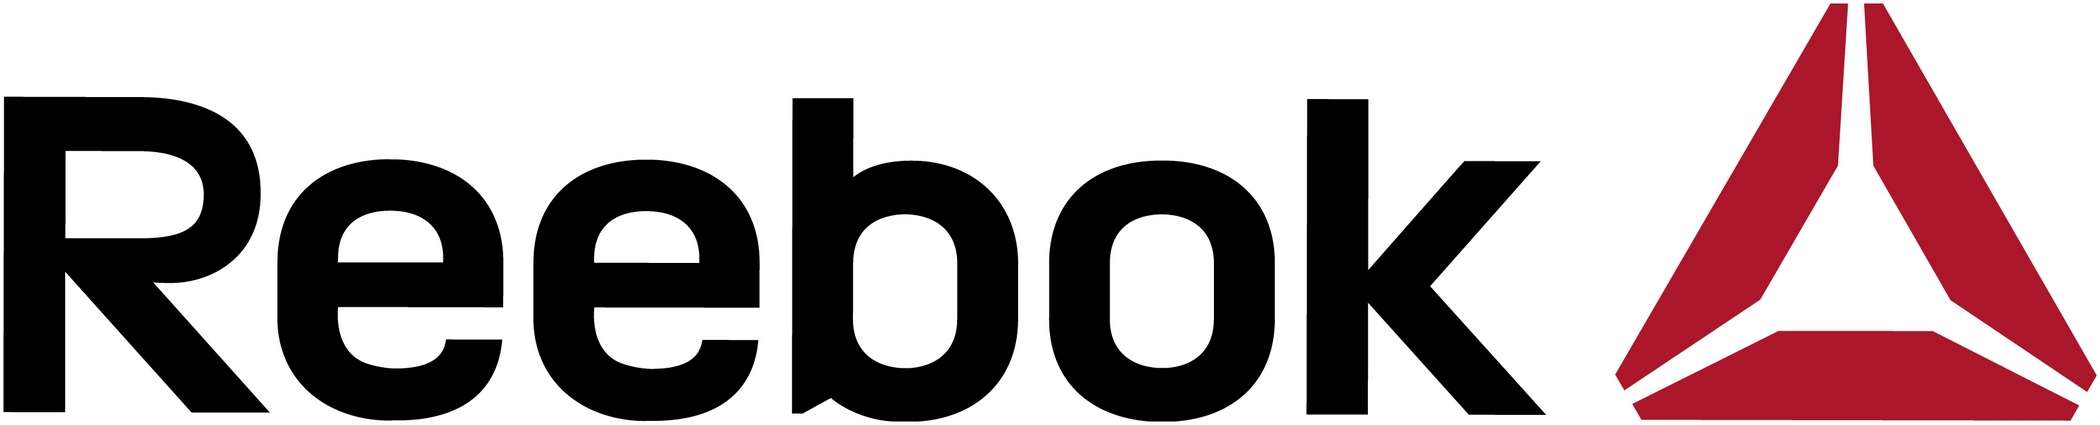 Reebok Logo [New] png